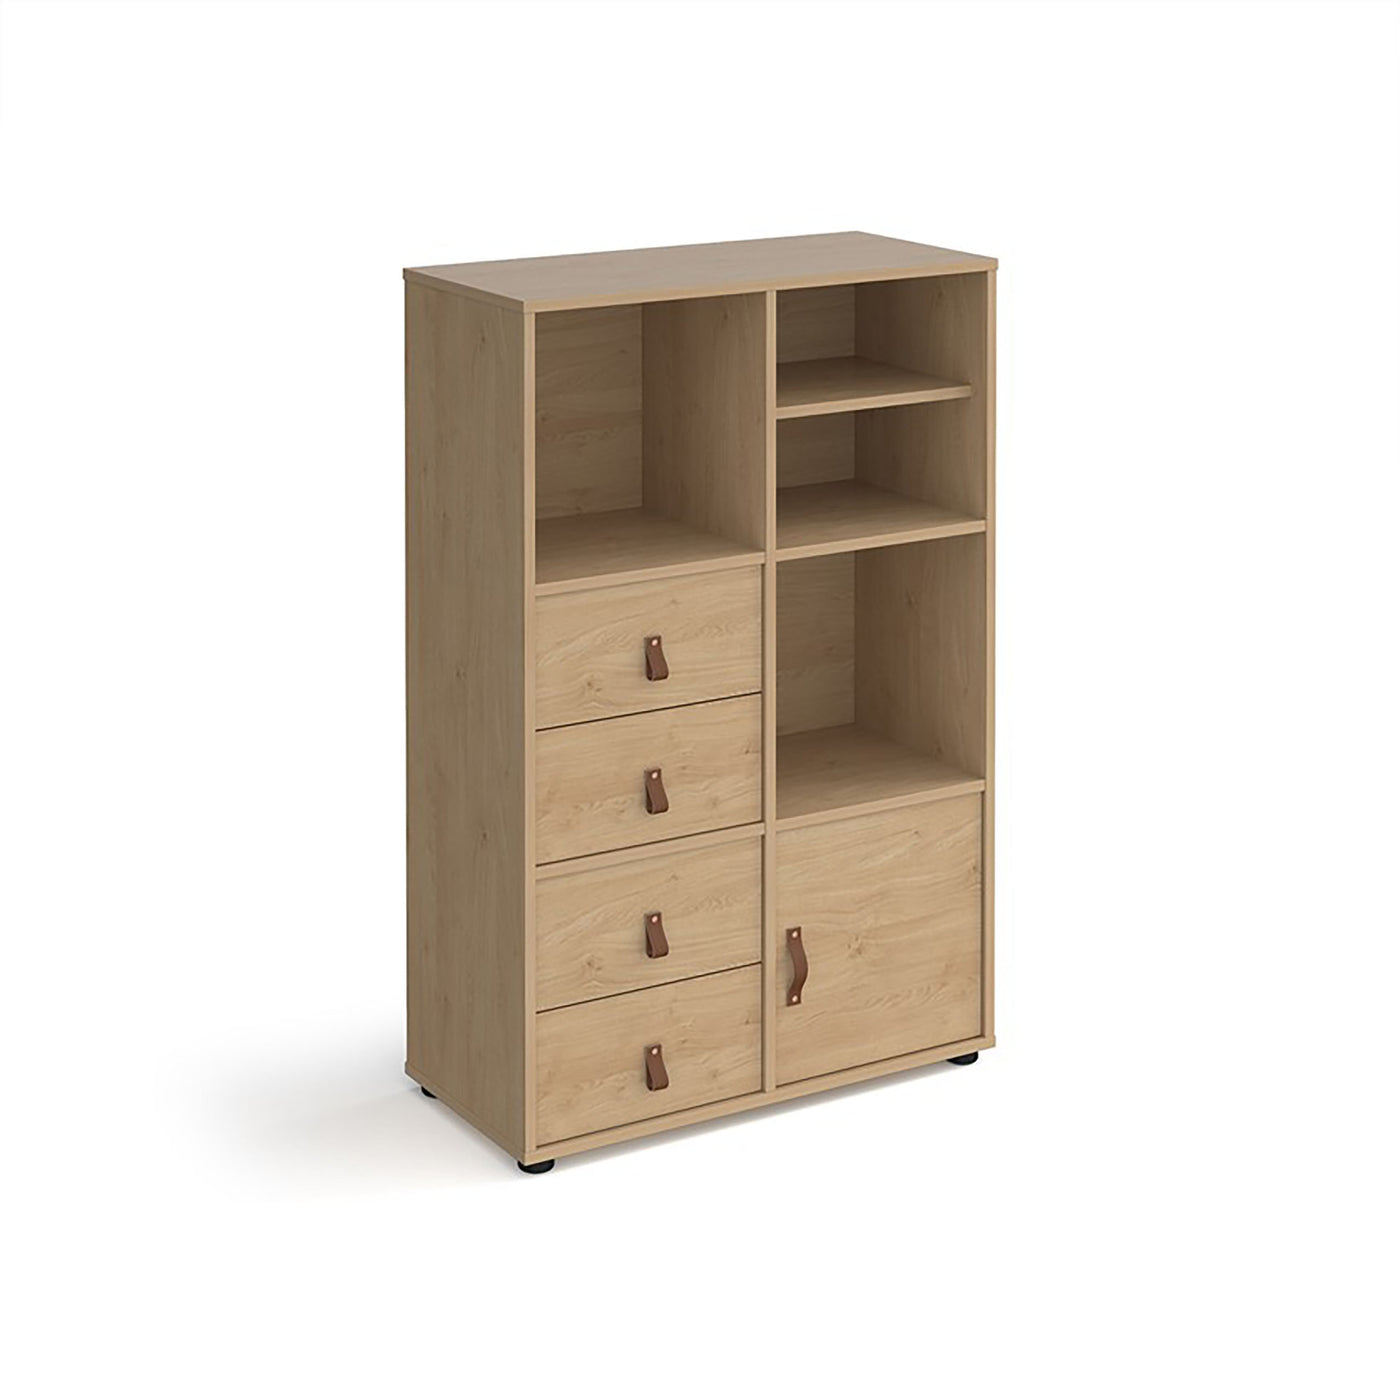 Cube Storage Unit Bundle 3 | Home Storage | Home Office Storage | Home Office Furniture | Home Furnishings